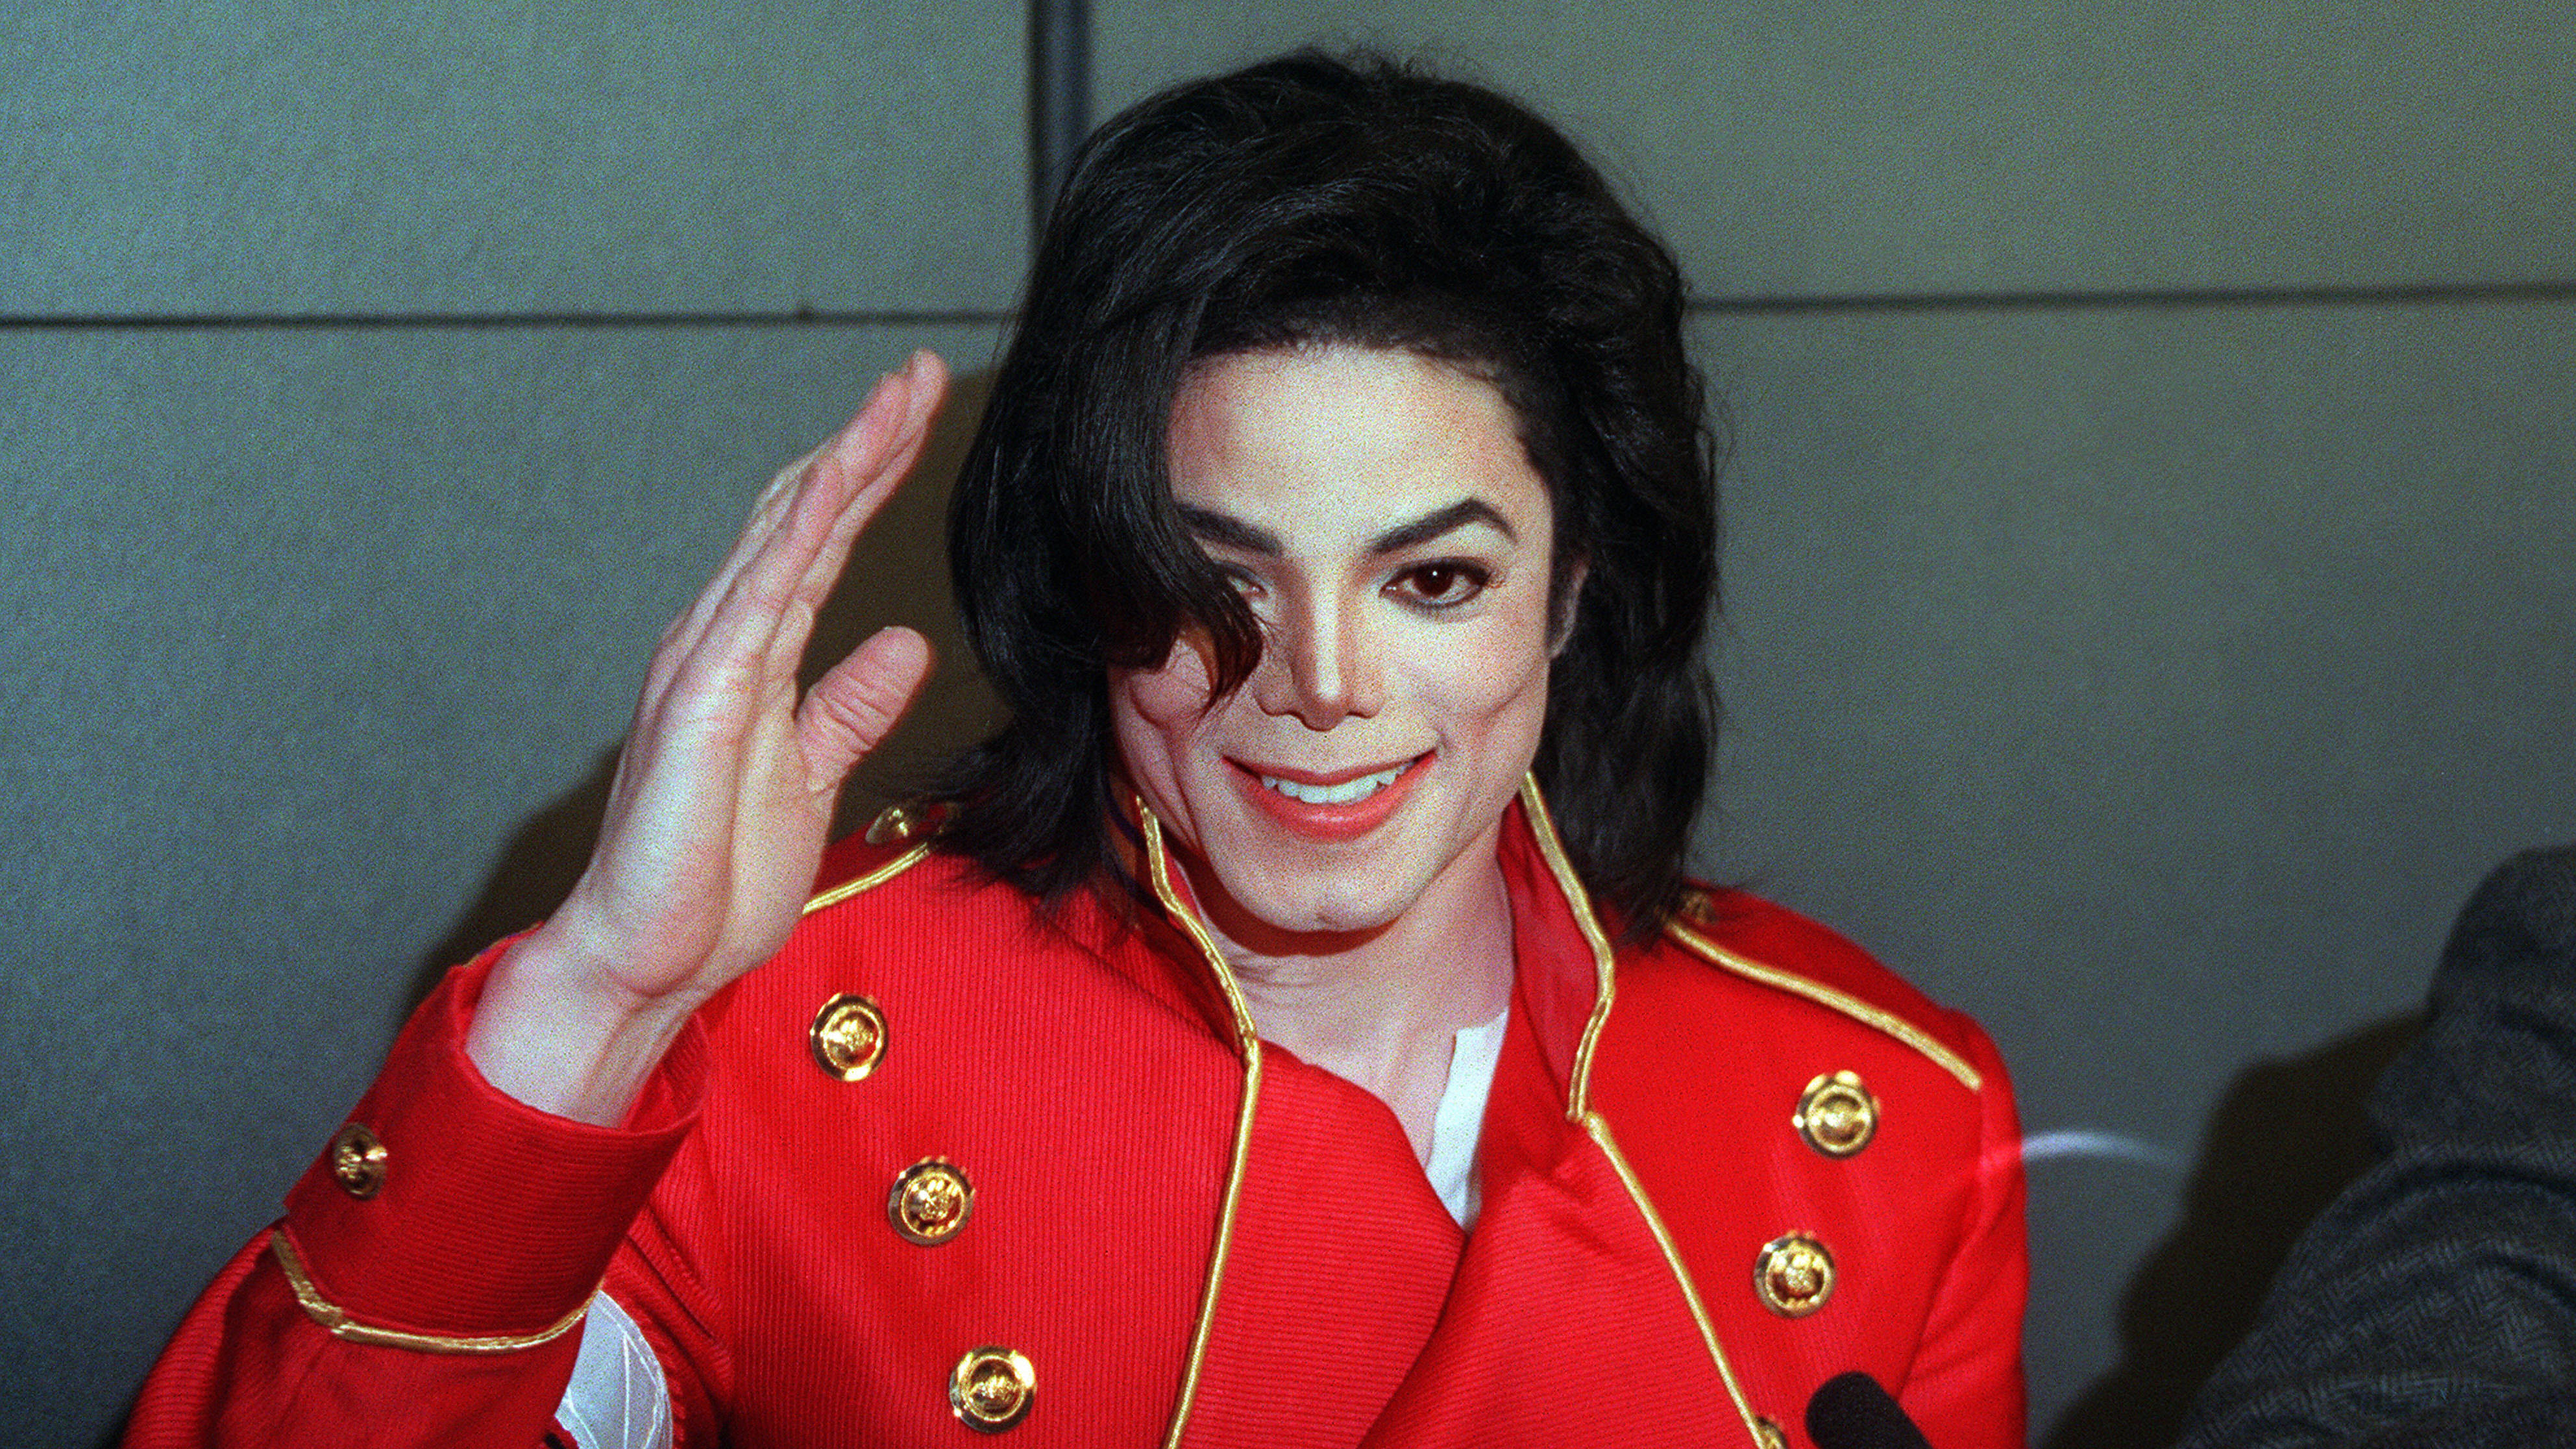 Jackson 5 \u0026 Michael Jackson - Guilty